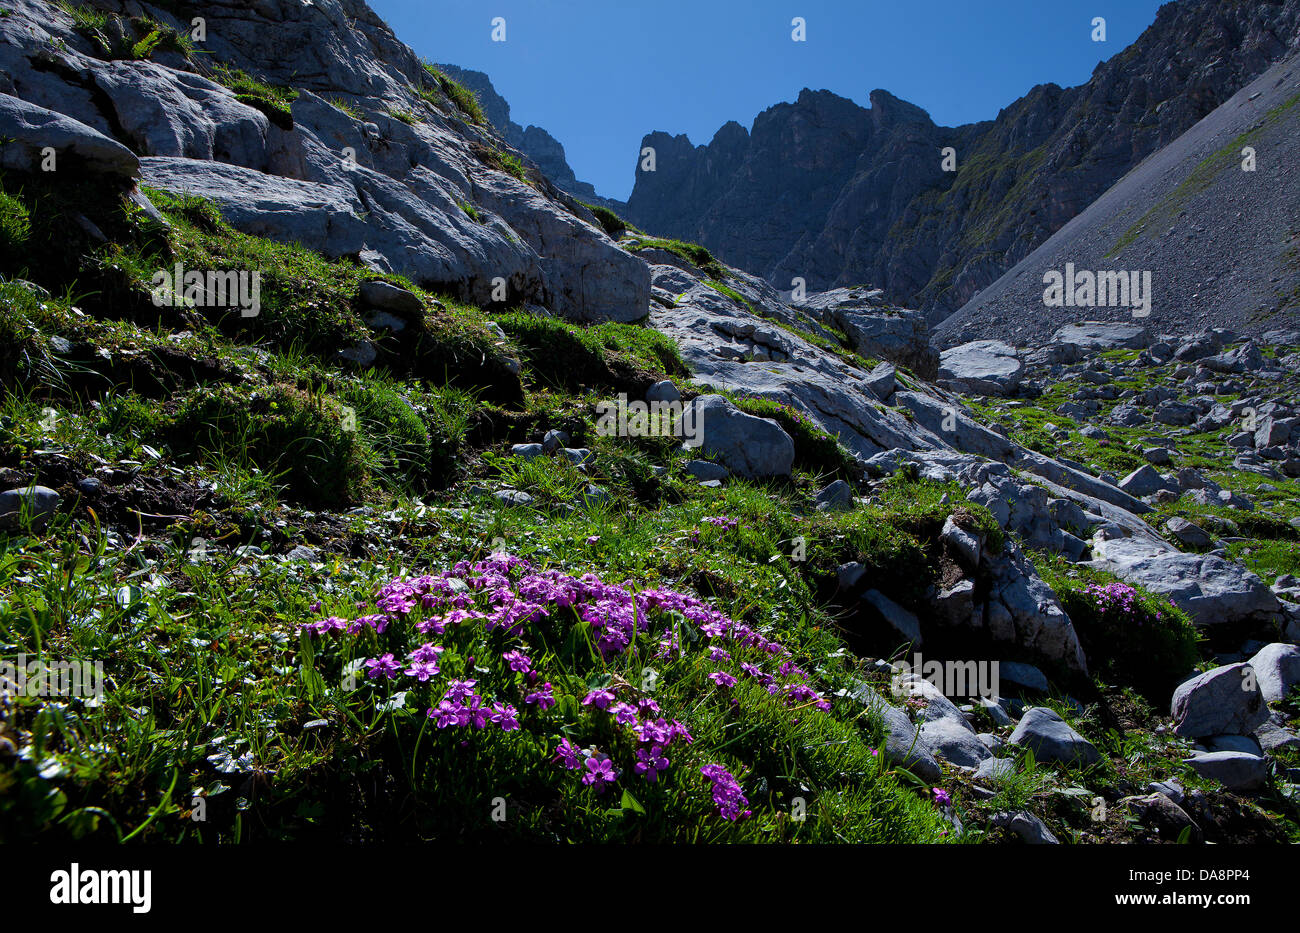 Austria, Europe, Tyrol, Ehrwald, Coburger hut, Drachenkar, Mieminger chain, mountains, green stone, flowers, mountain flowers, A Stock Photo